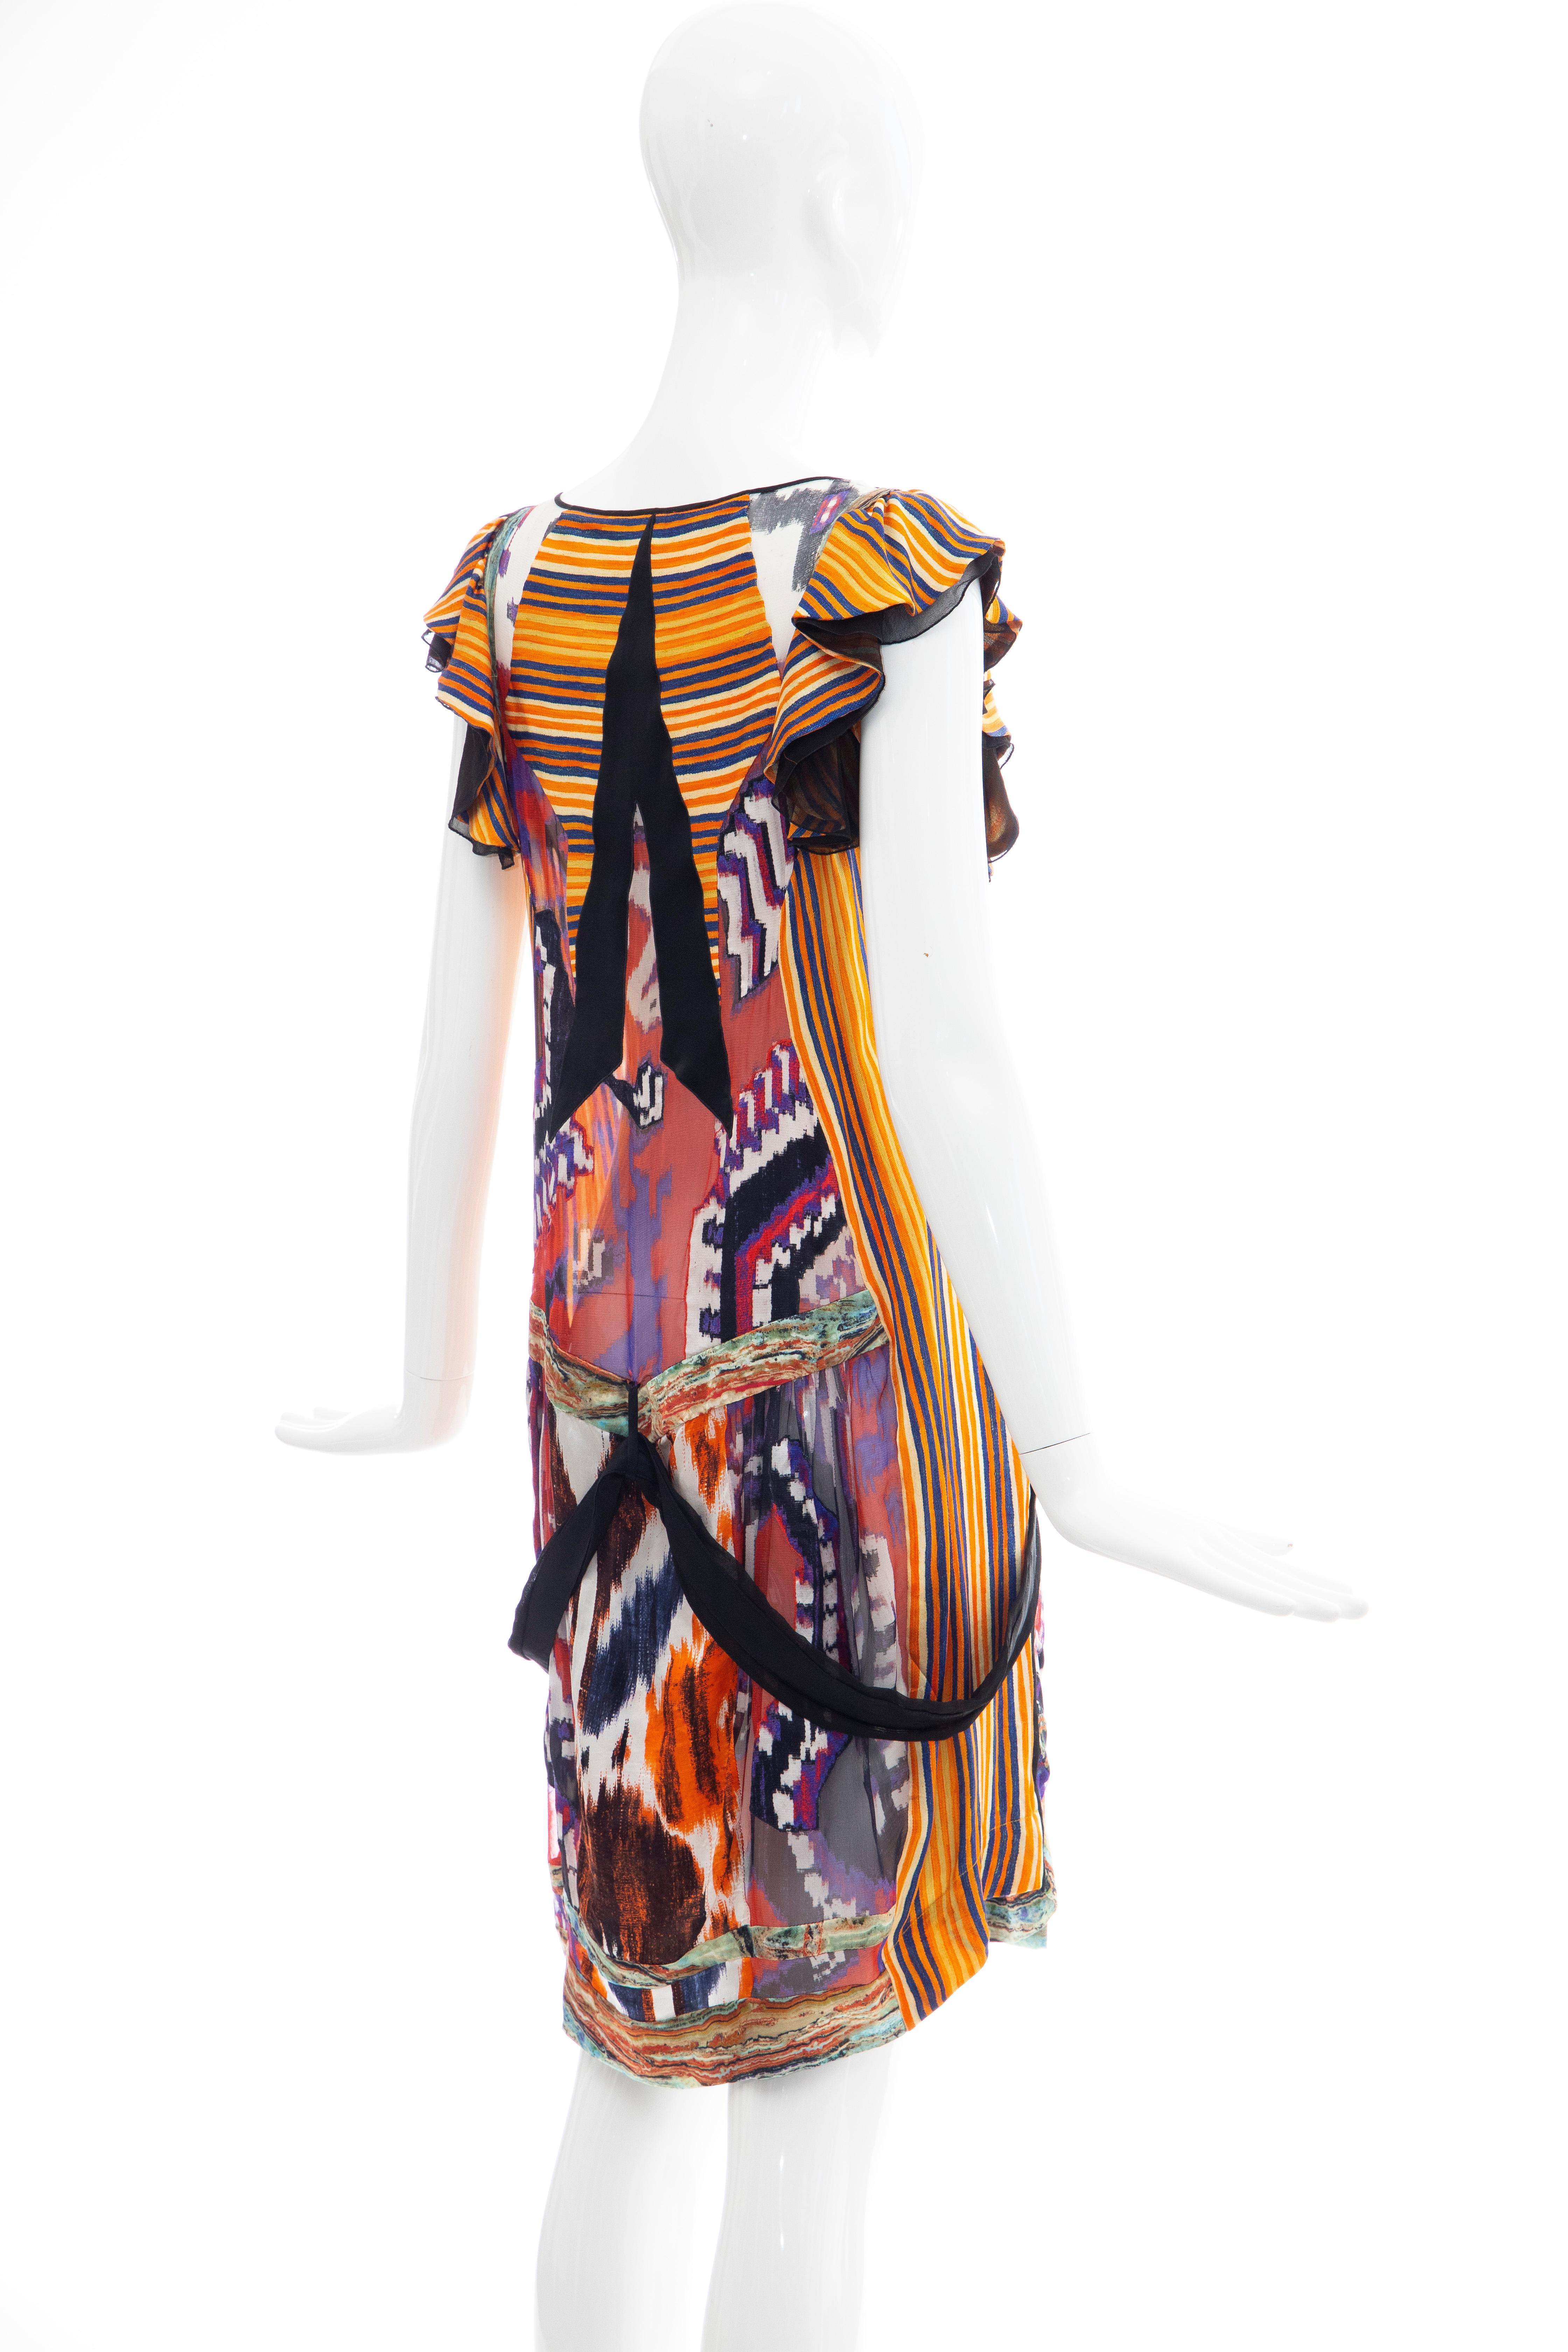  Nicolas Ghesquière for Balenciaga Runway Silk Ikat Print Dress, Fall 2007 1